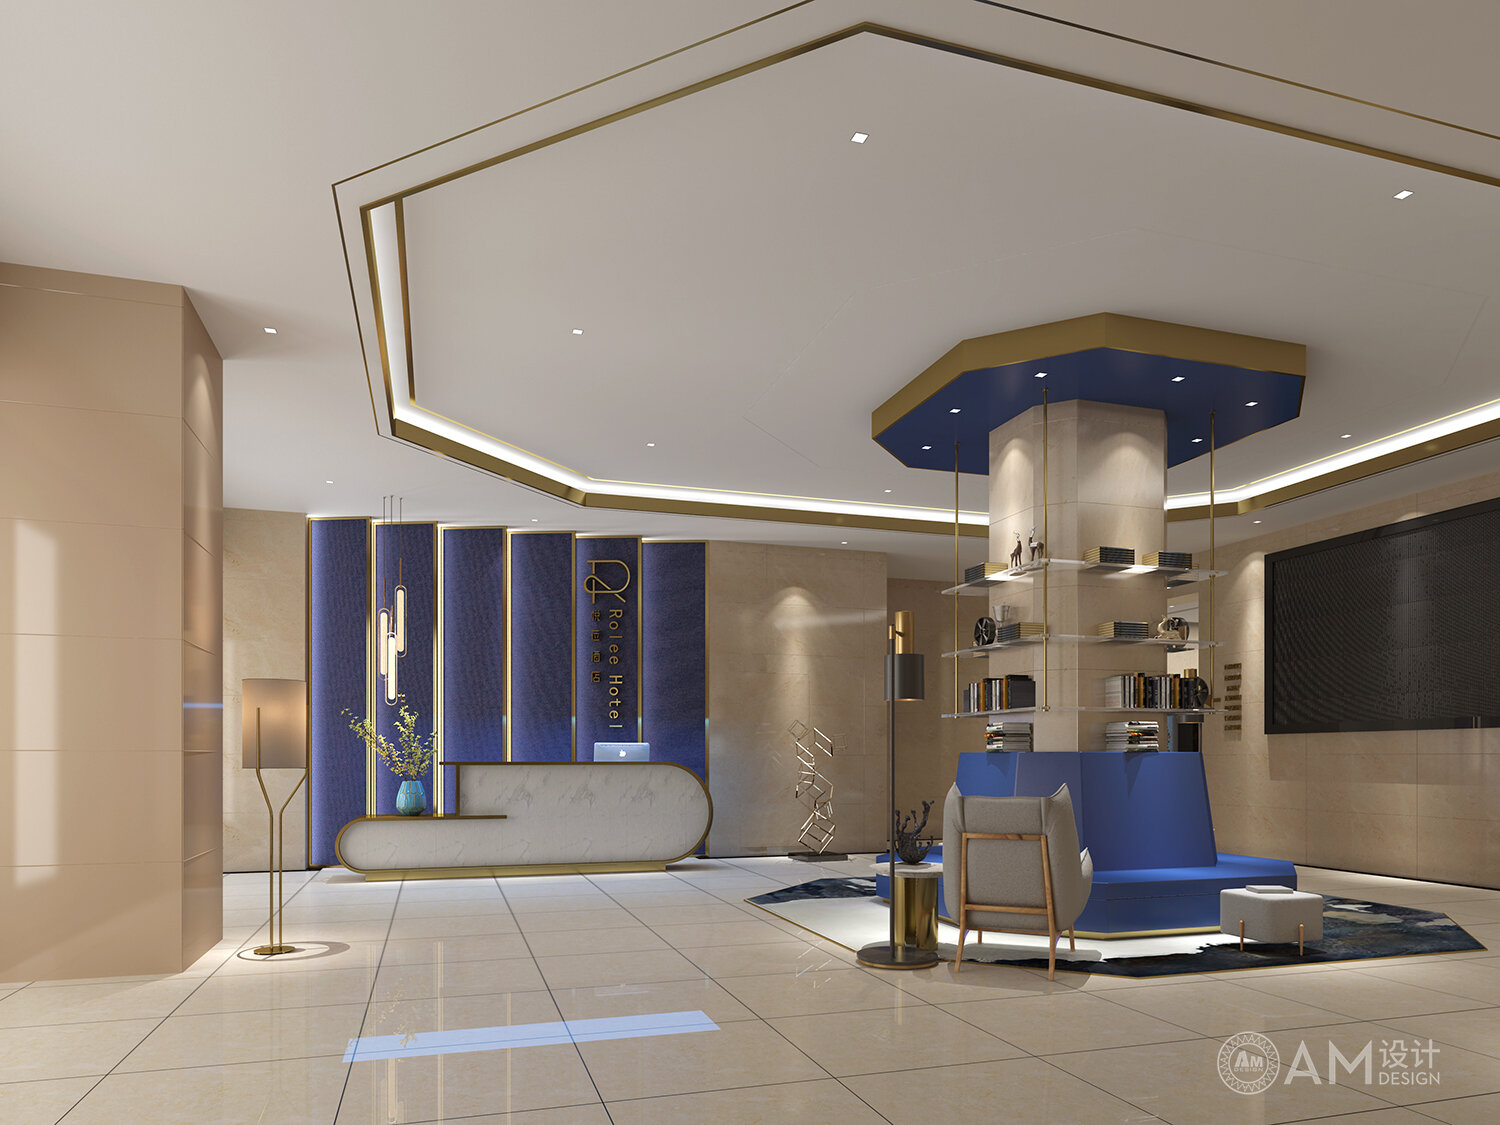 AM|Yuelai Hotel Lobby Design